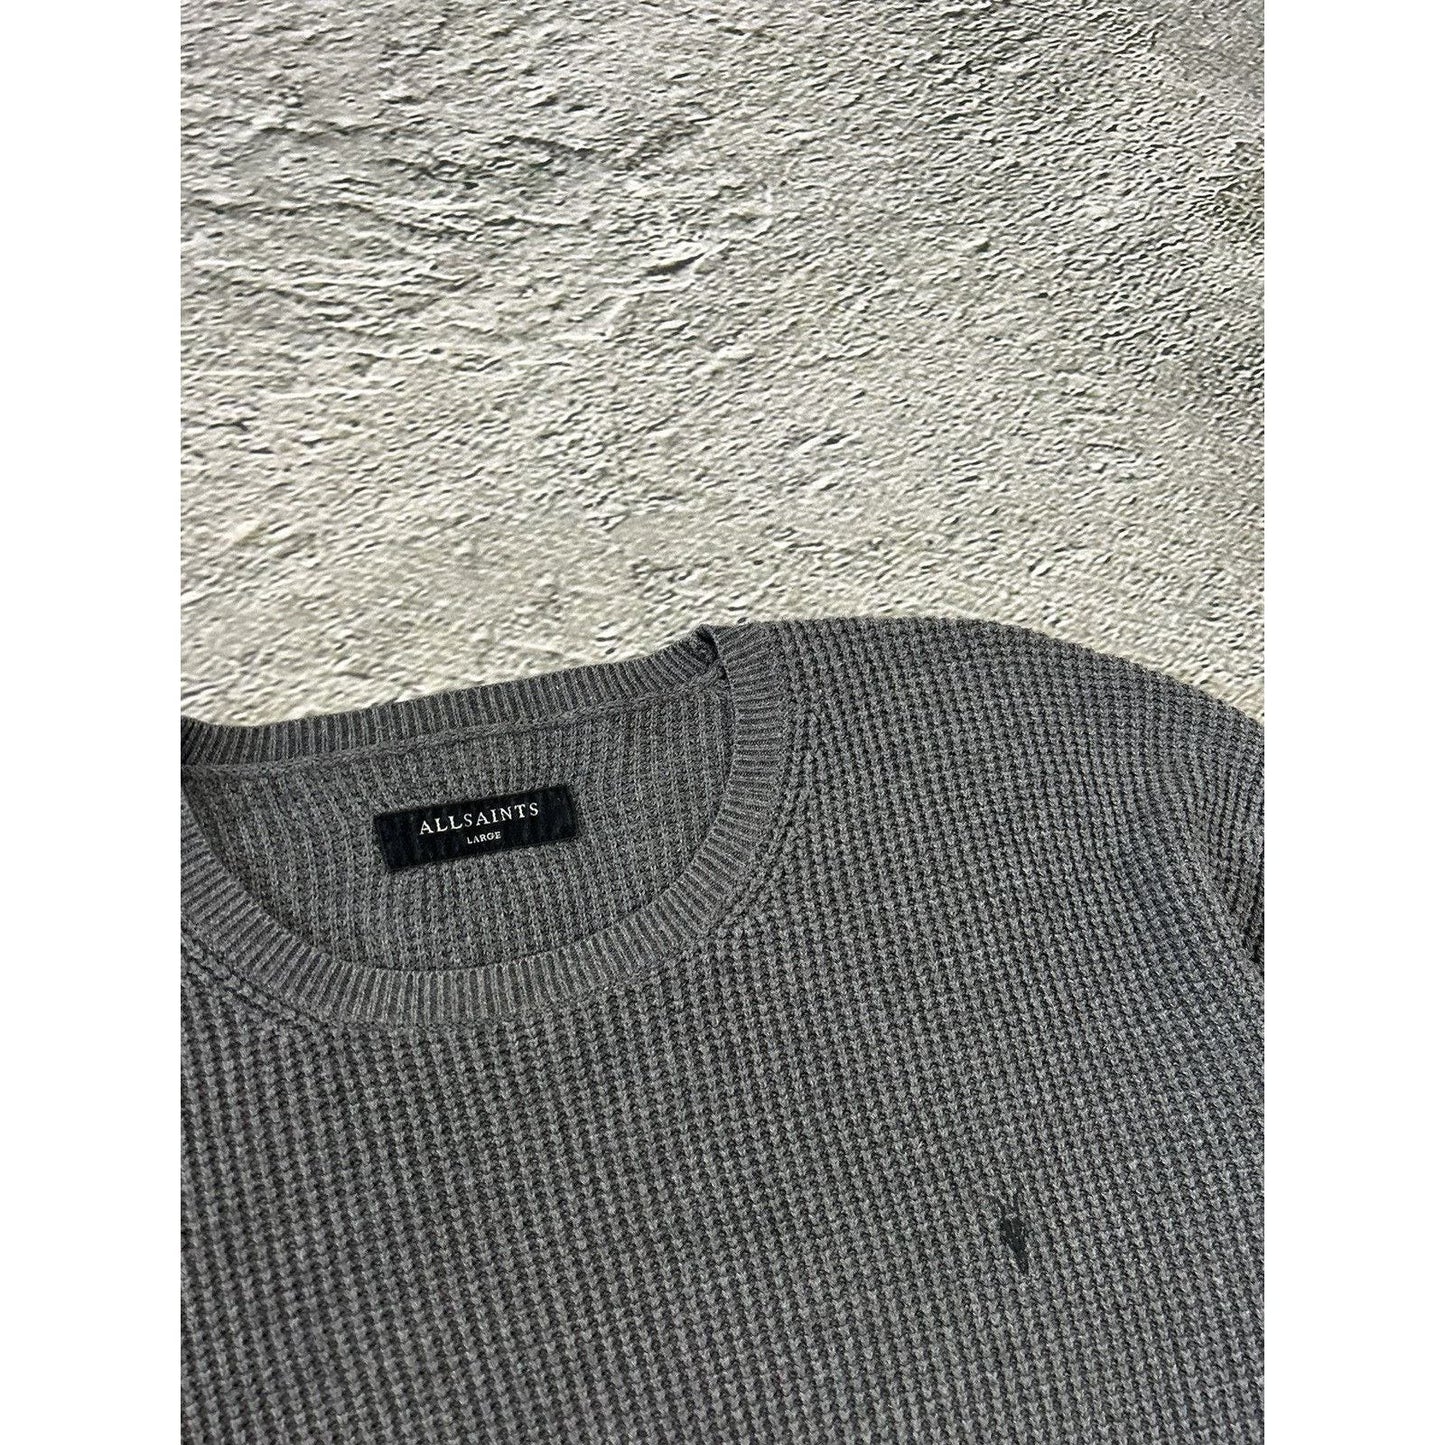 Allsaints sweater grey small logo